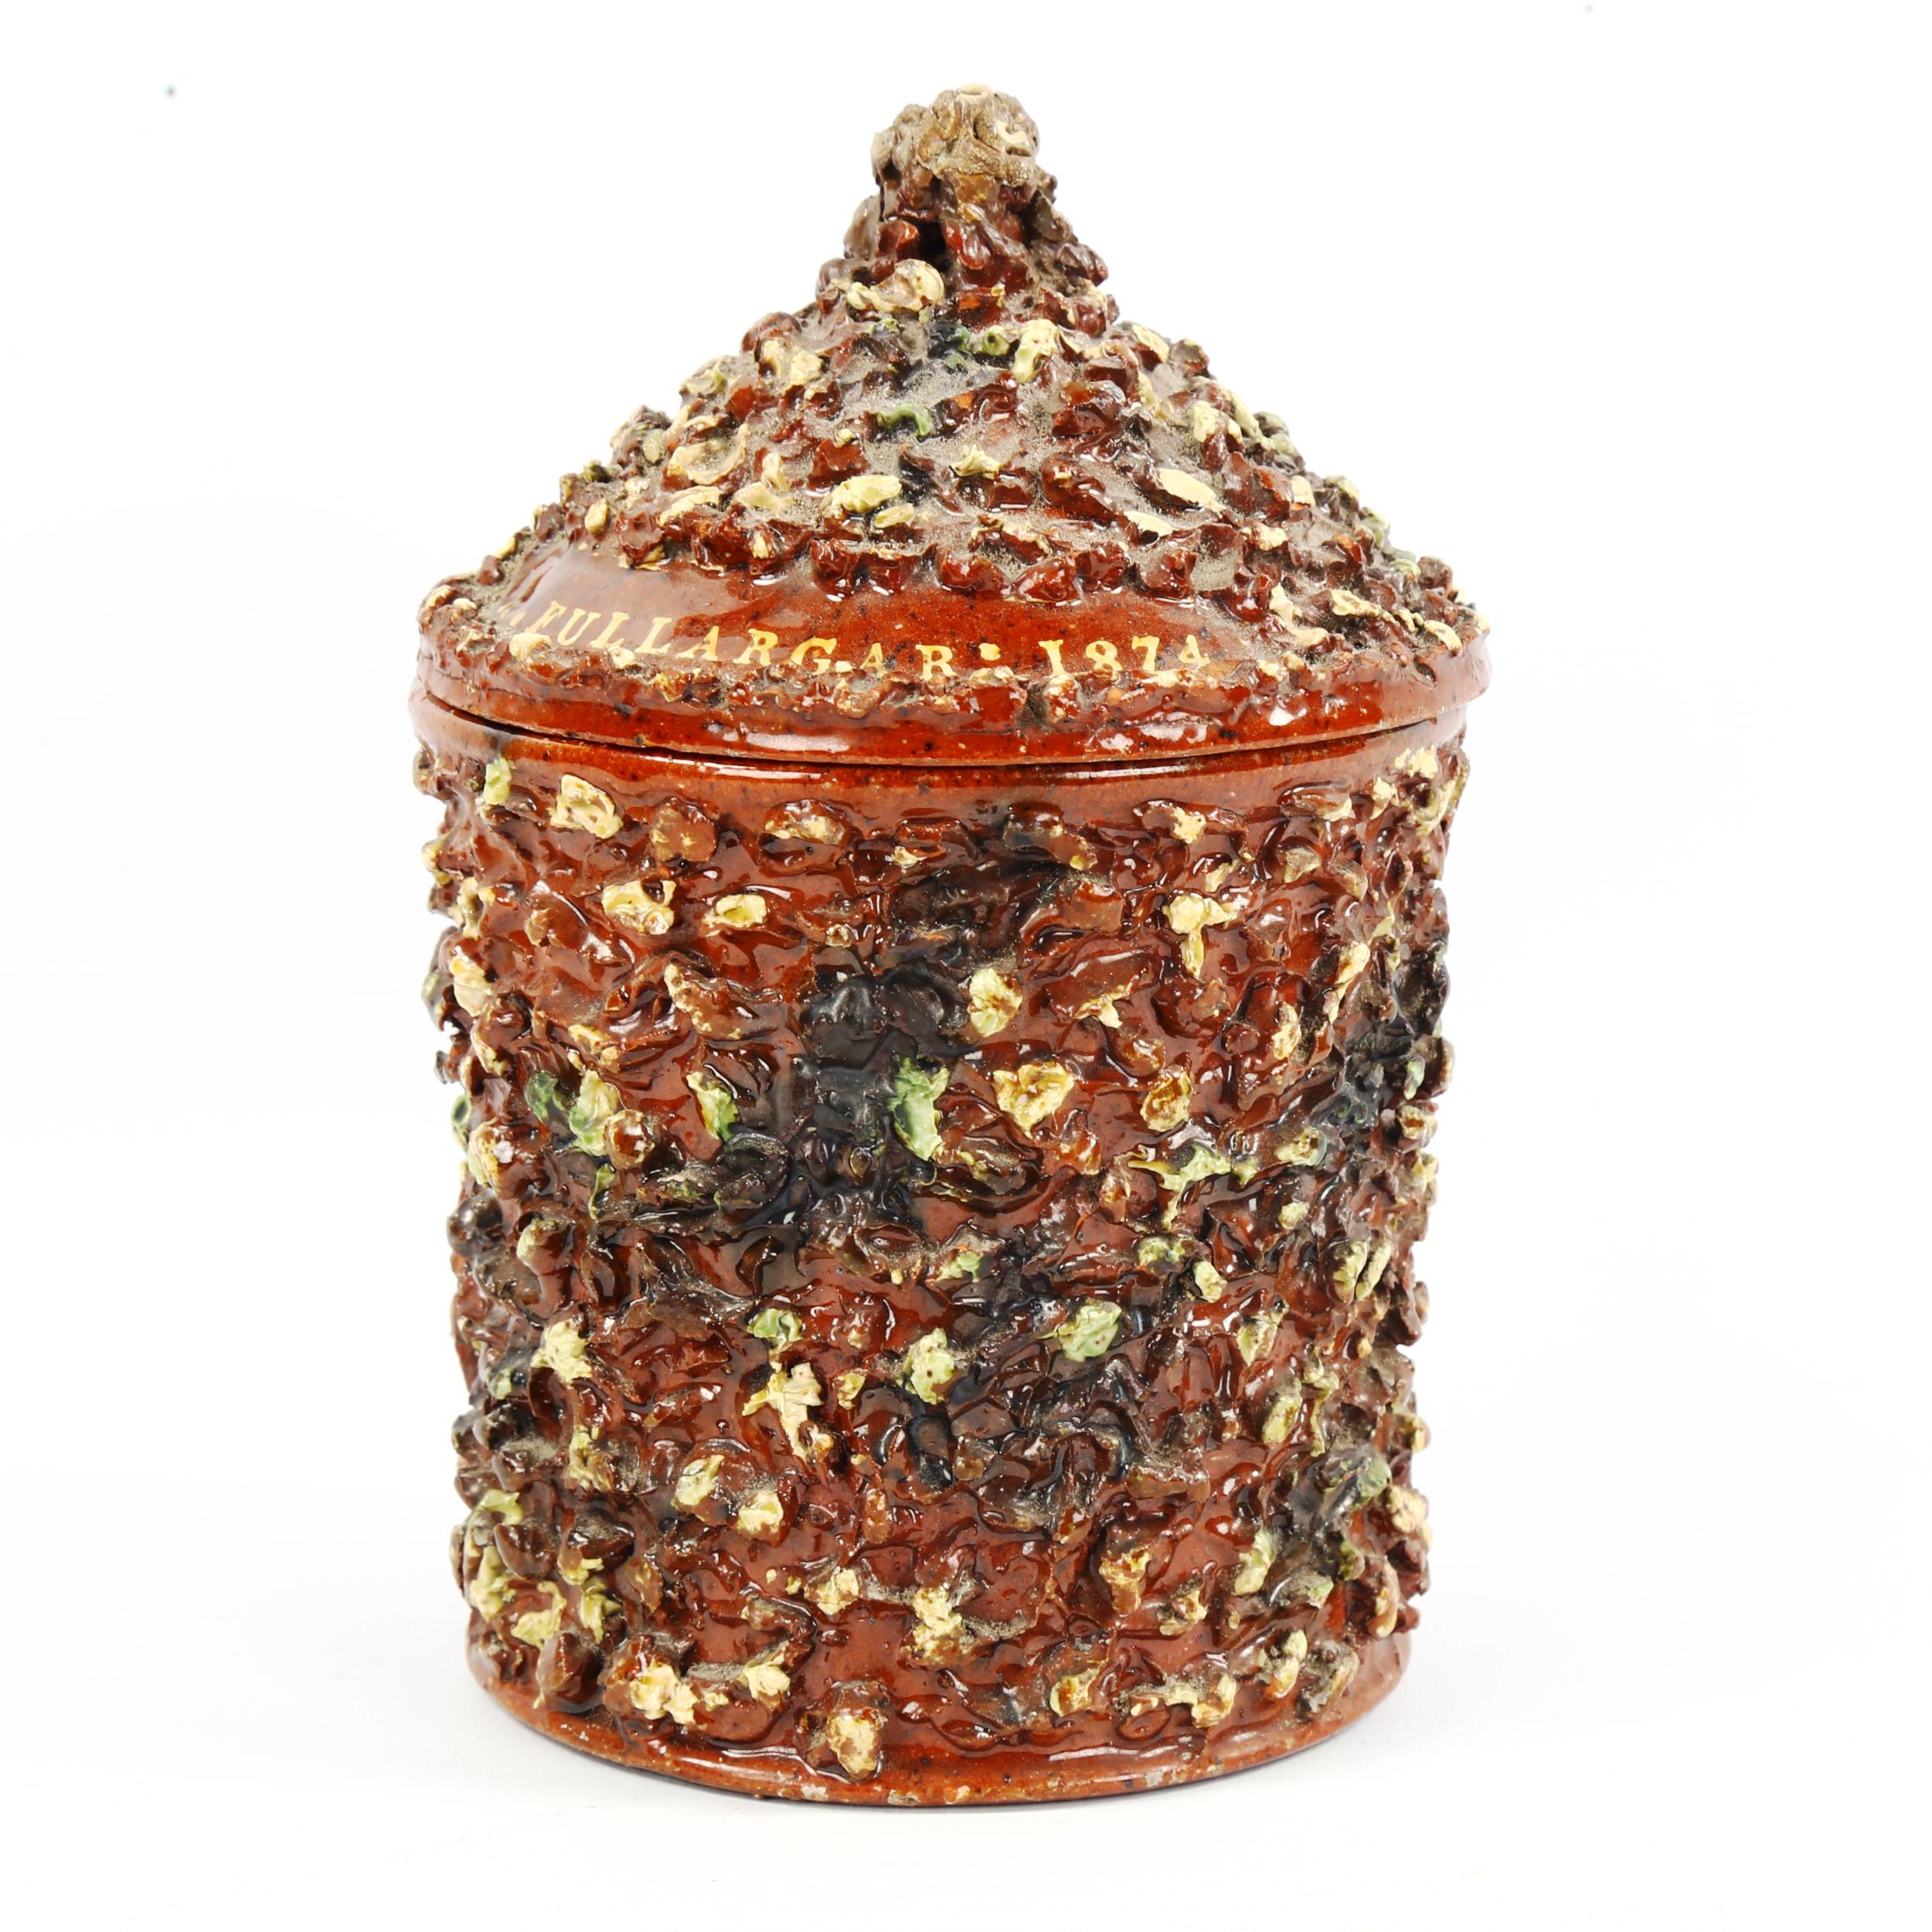 A 19th century slipware tobacco jar, probably Brede pottery, inscribed "A.Fullargar:1874", height